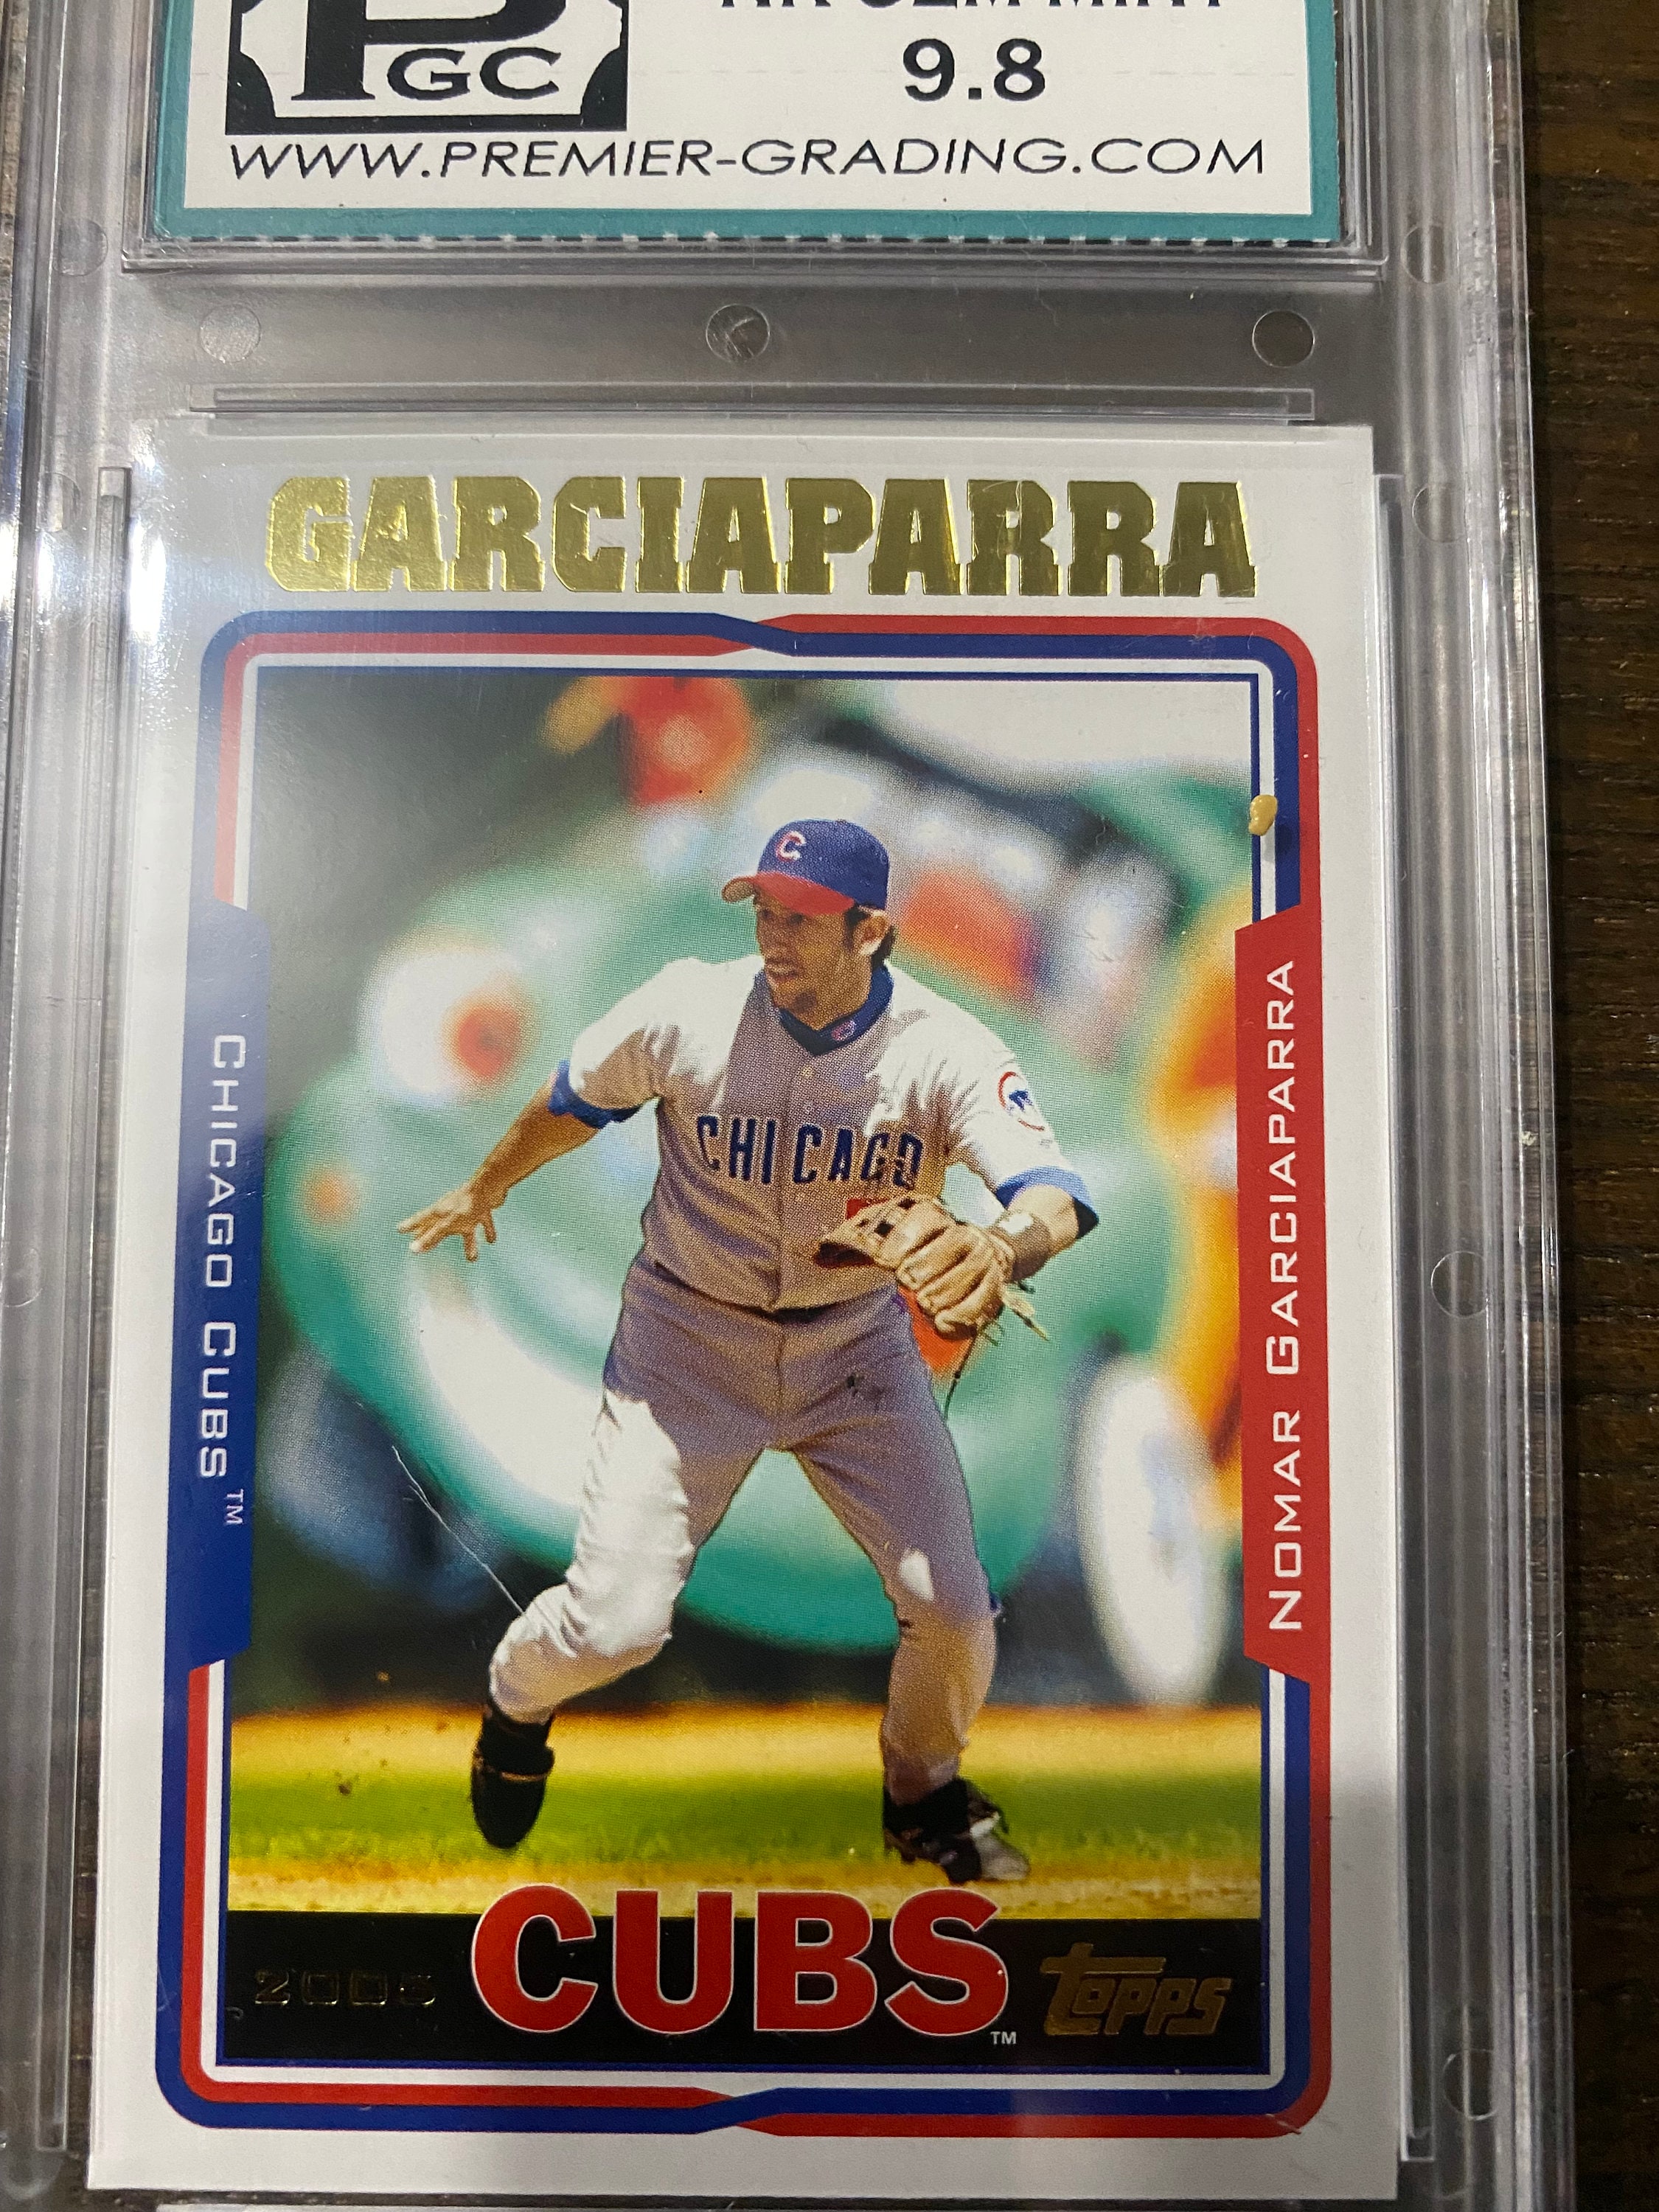 Nomar Garciaparra - 2005 TOPPS Card - Graded 9.8 - Baseball Card - gorgeous  card